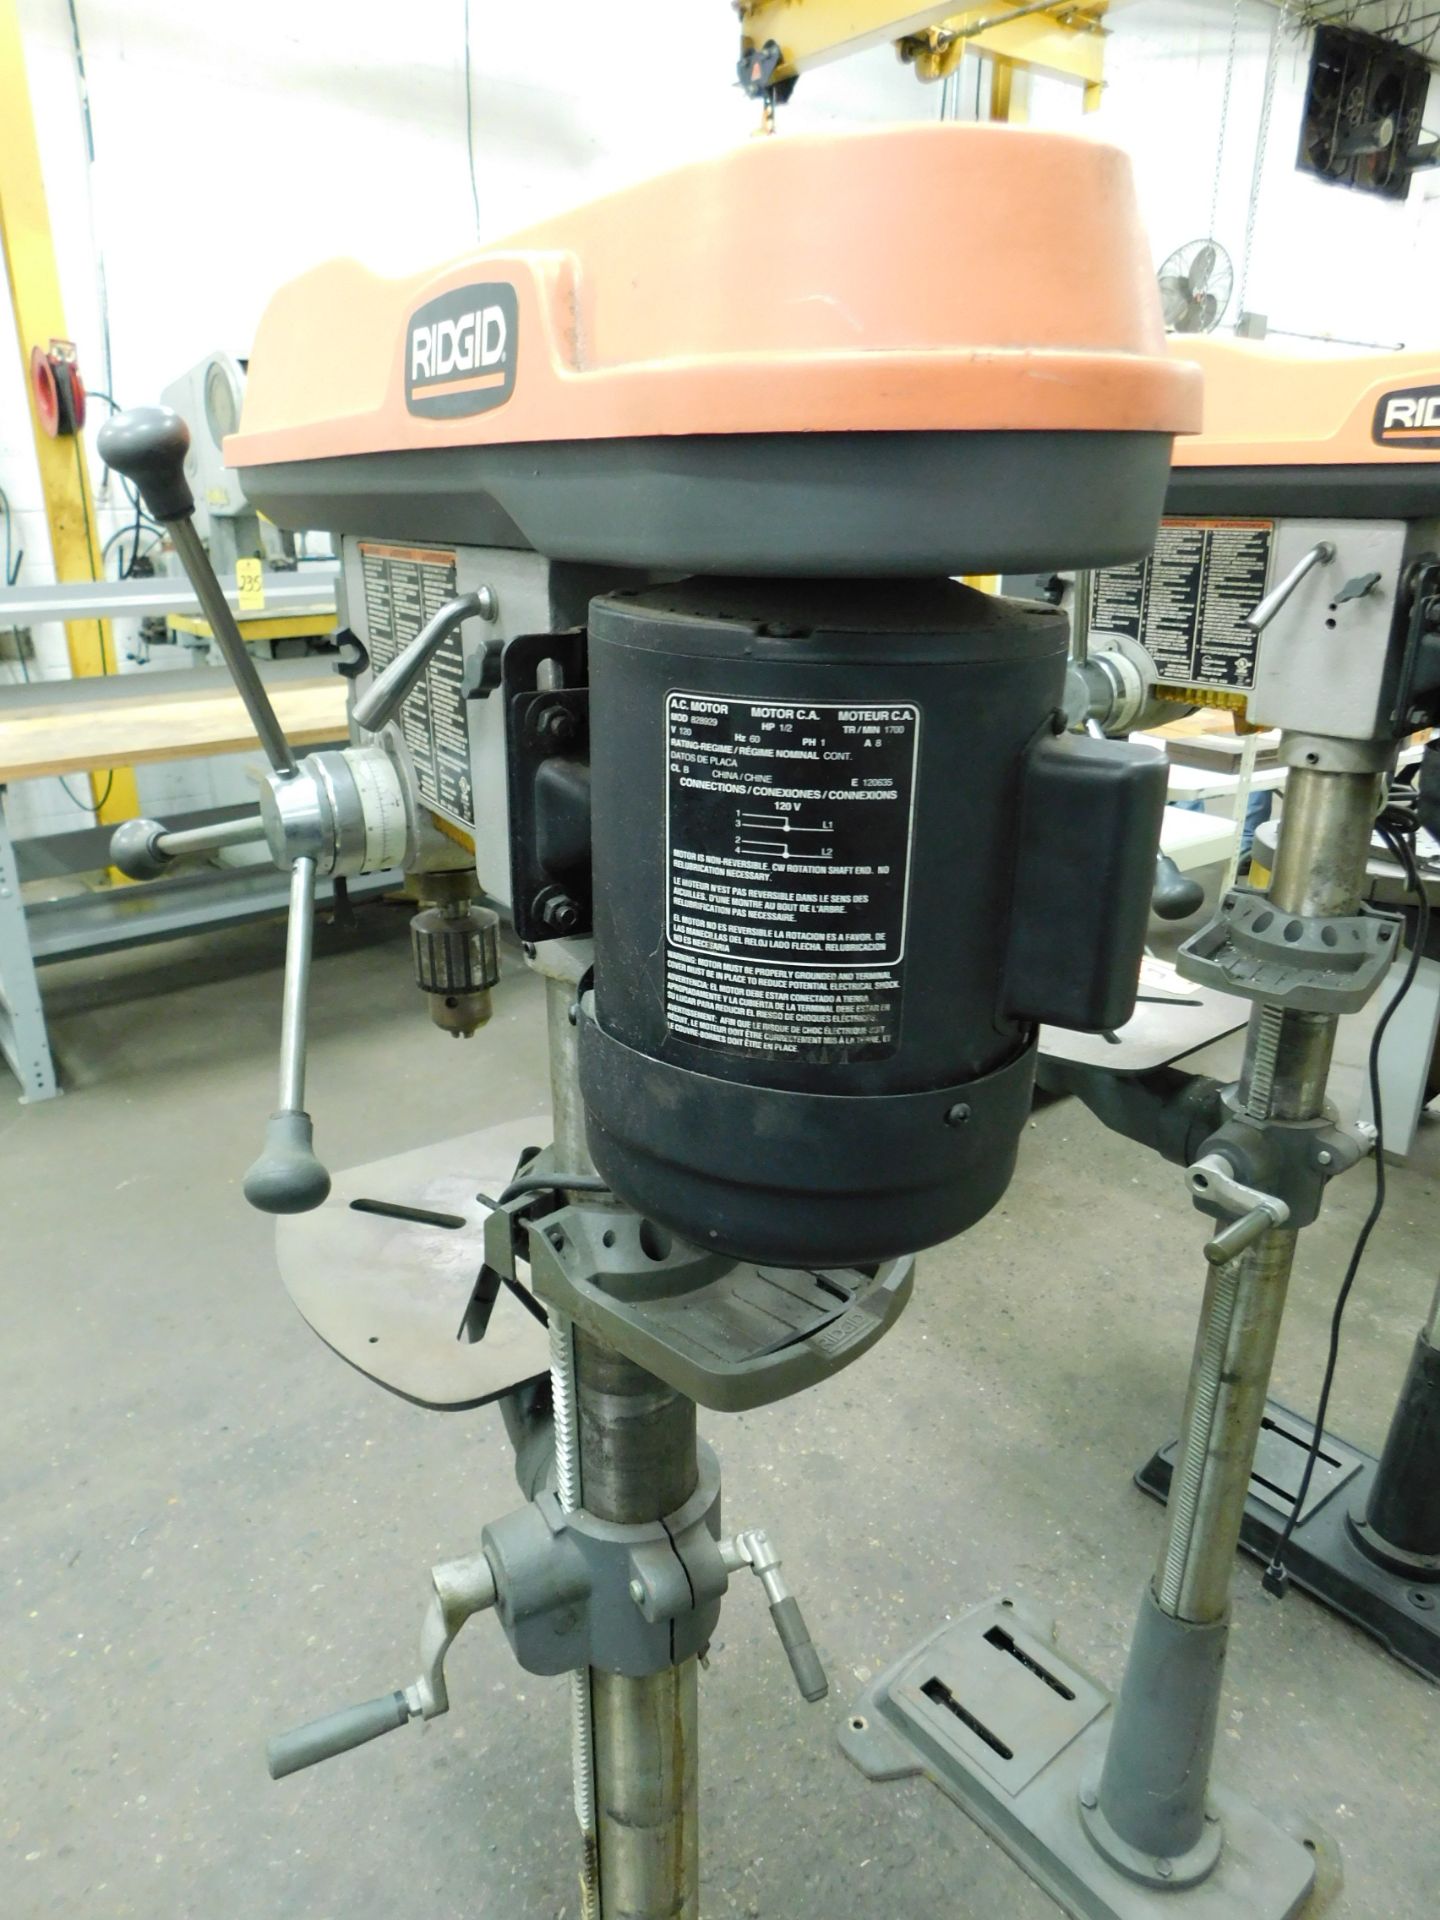 Ridgid Model DP15501, 15 In. Floor Model Drill Press, s/n AM062653519, 110/1/60 AC - Image 9 of 12